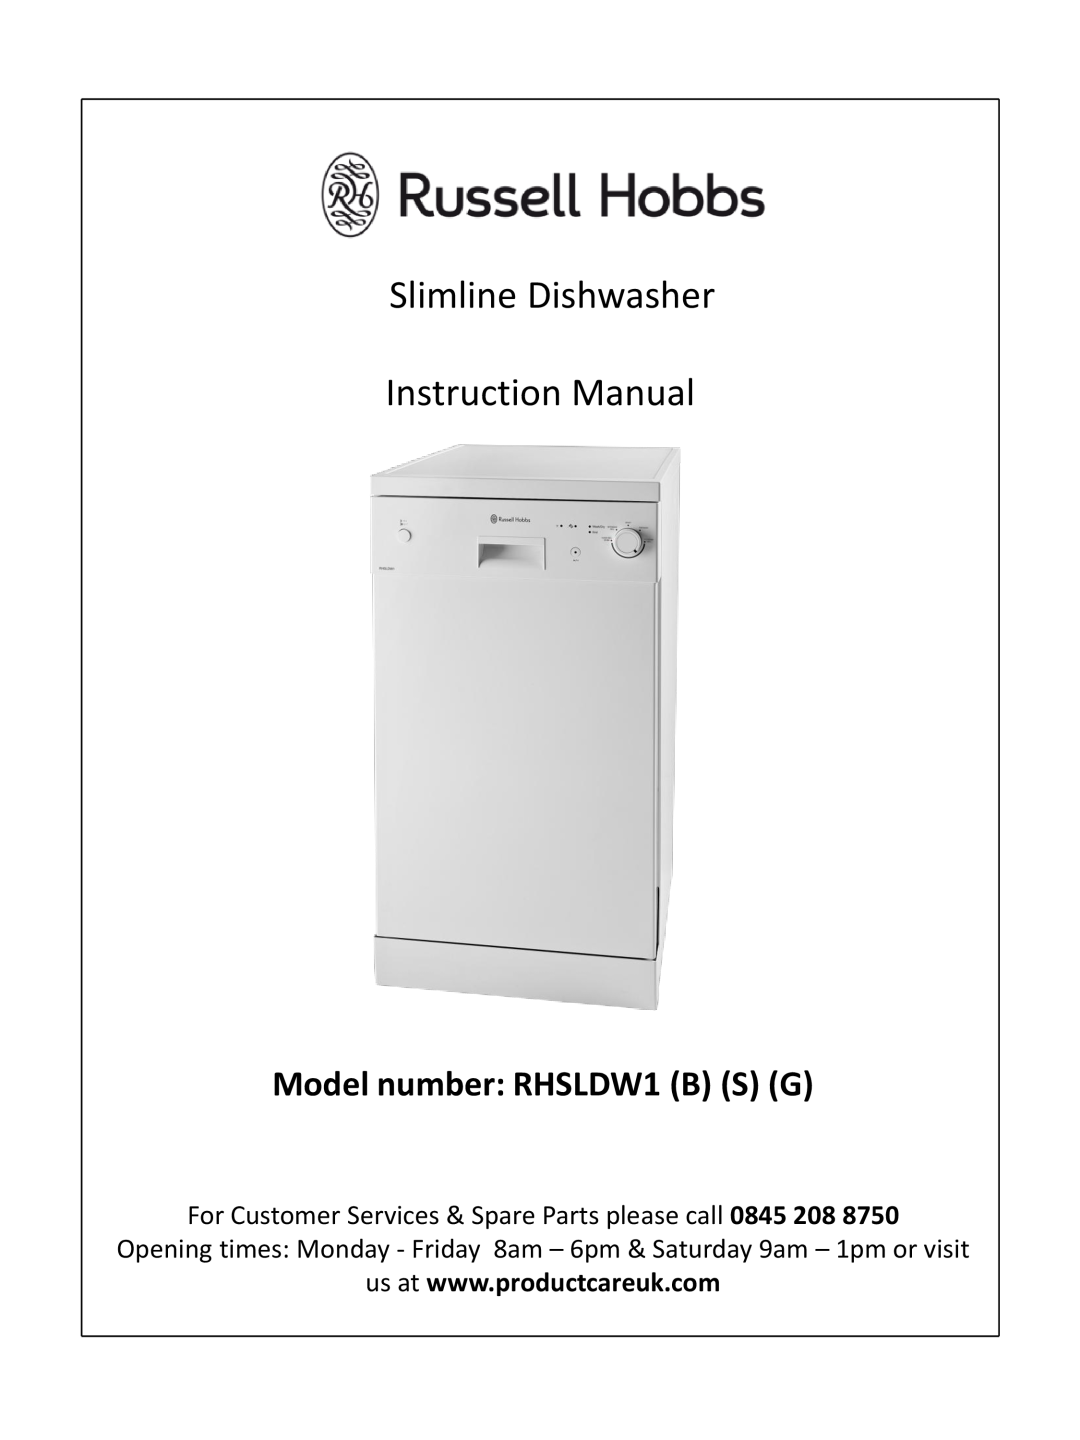 Russell Hobbs RHSLDW1G, RHSLDW1S, RHSLDW1B instruction manual Model number RHSLDW1 B S G 